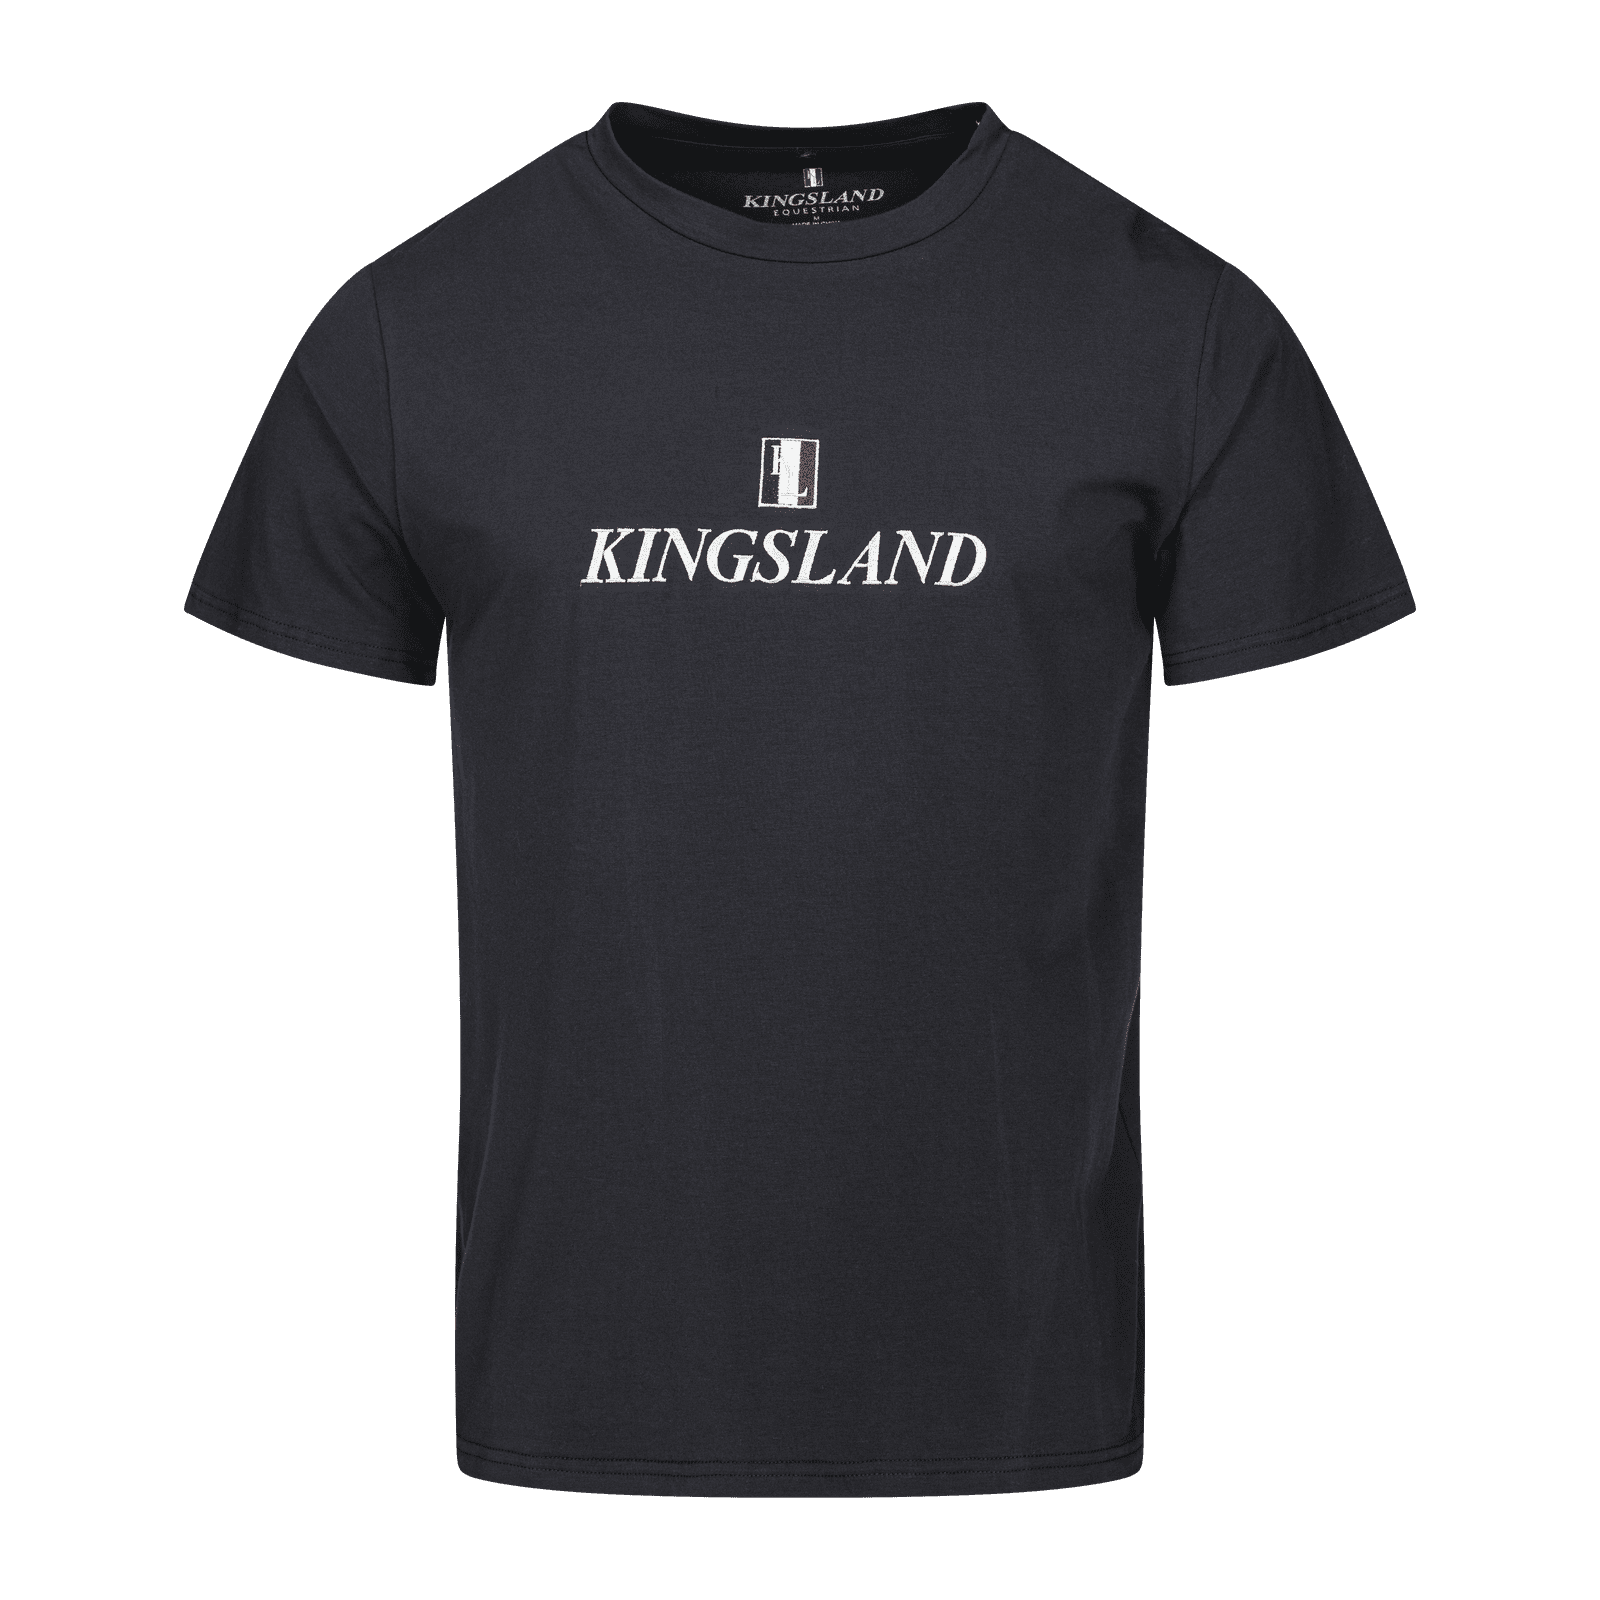 Kingsland Classic Junior/Kinder-T-Shirt in navy bei SP-Reitsport Kingsland bei SP-Reitsport